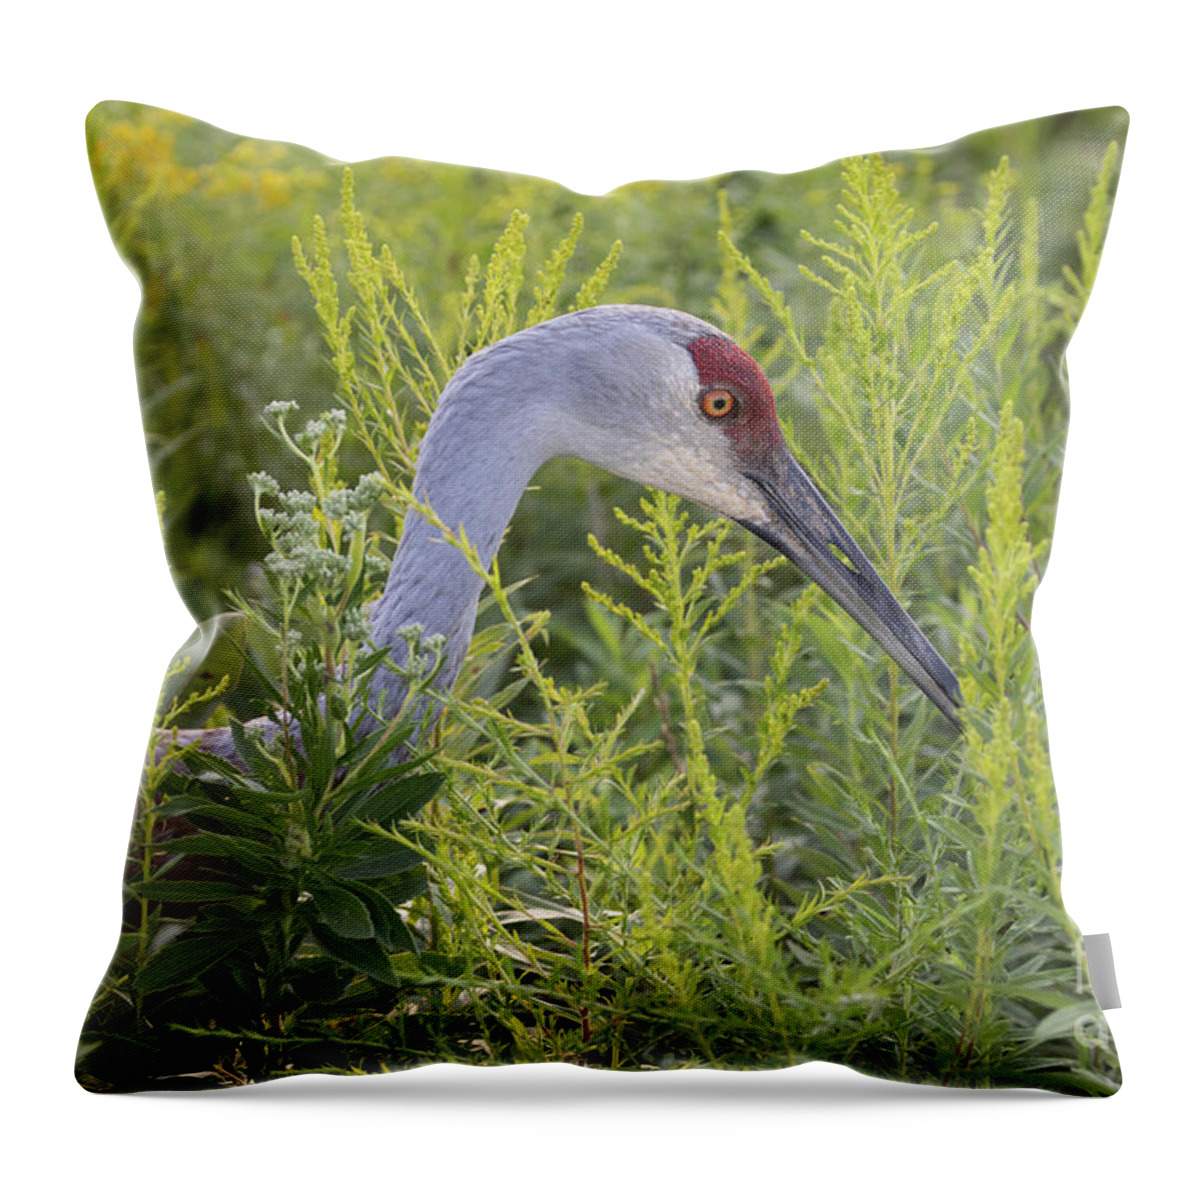 Sandhill Crane Throw Pillow featuring the photograph Sandhill Crane by Jeannette Hunt